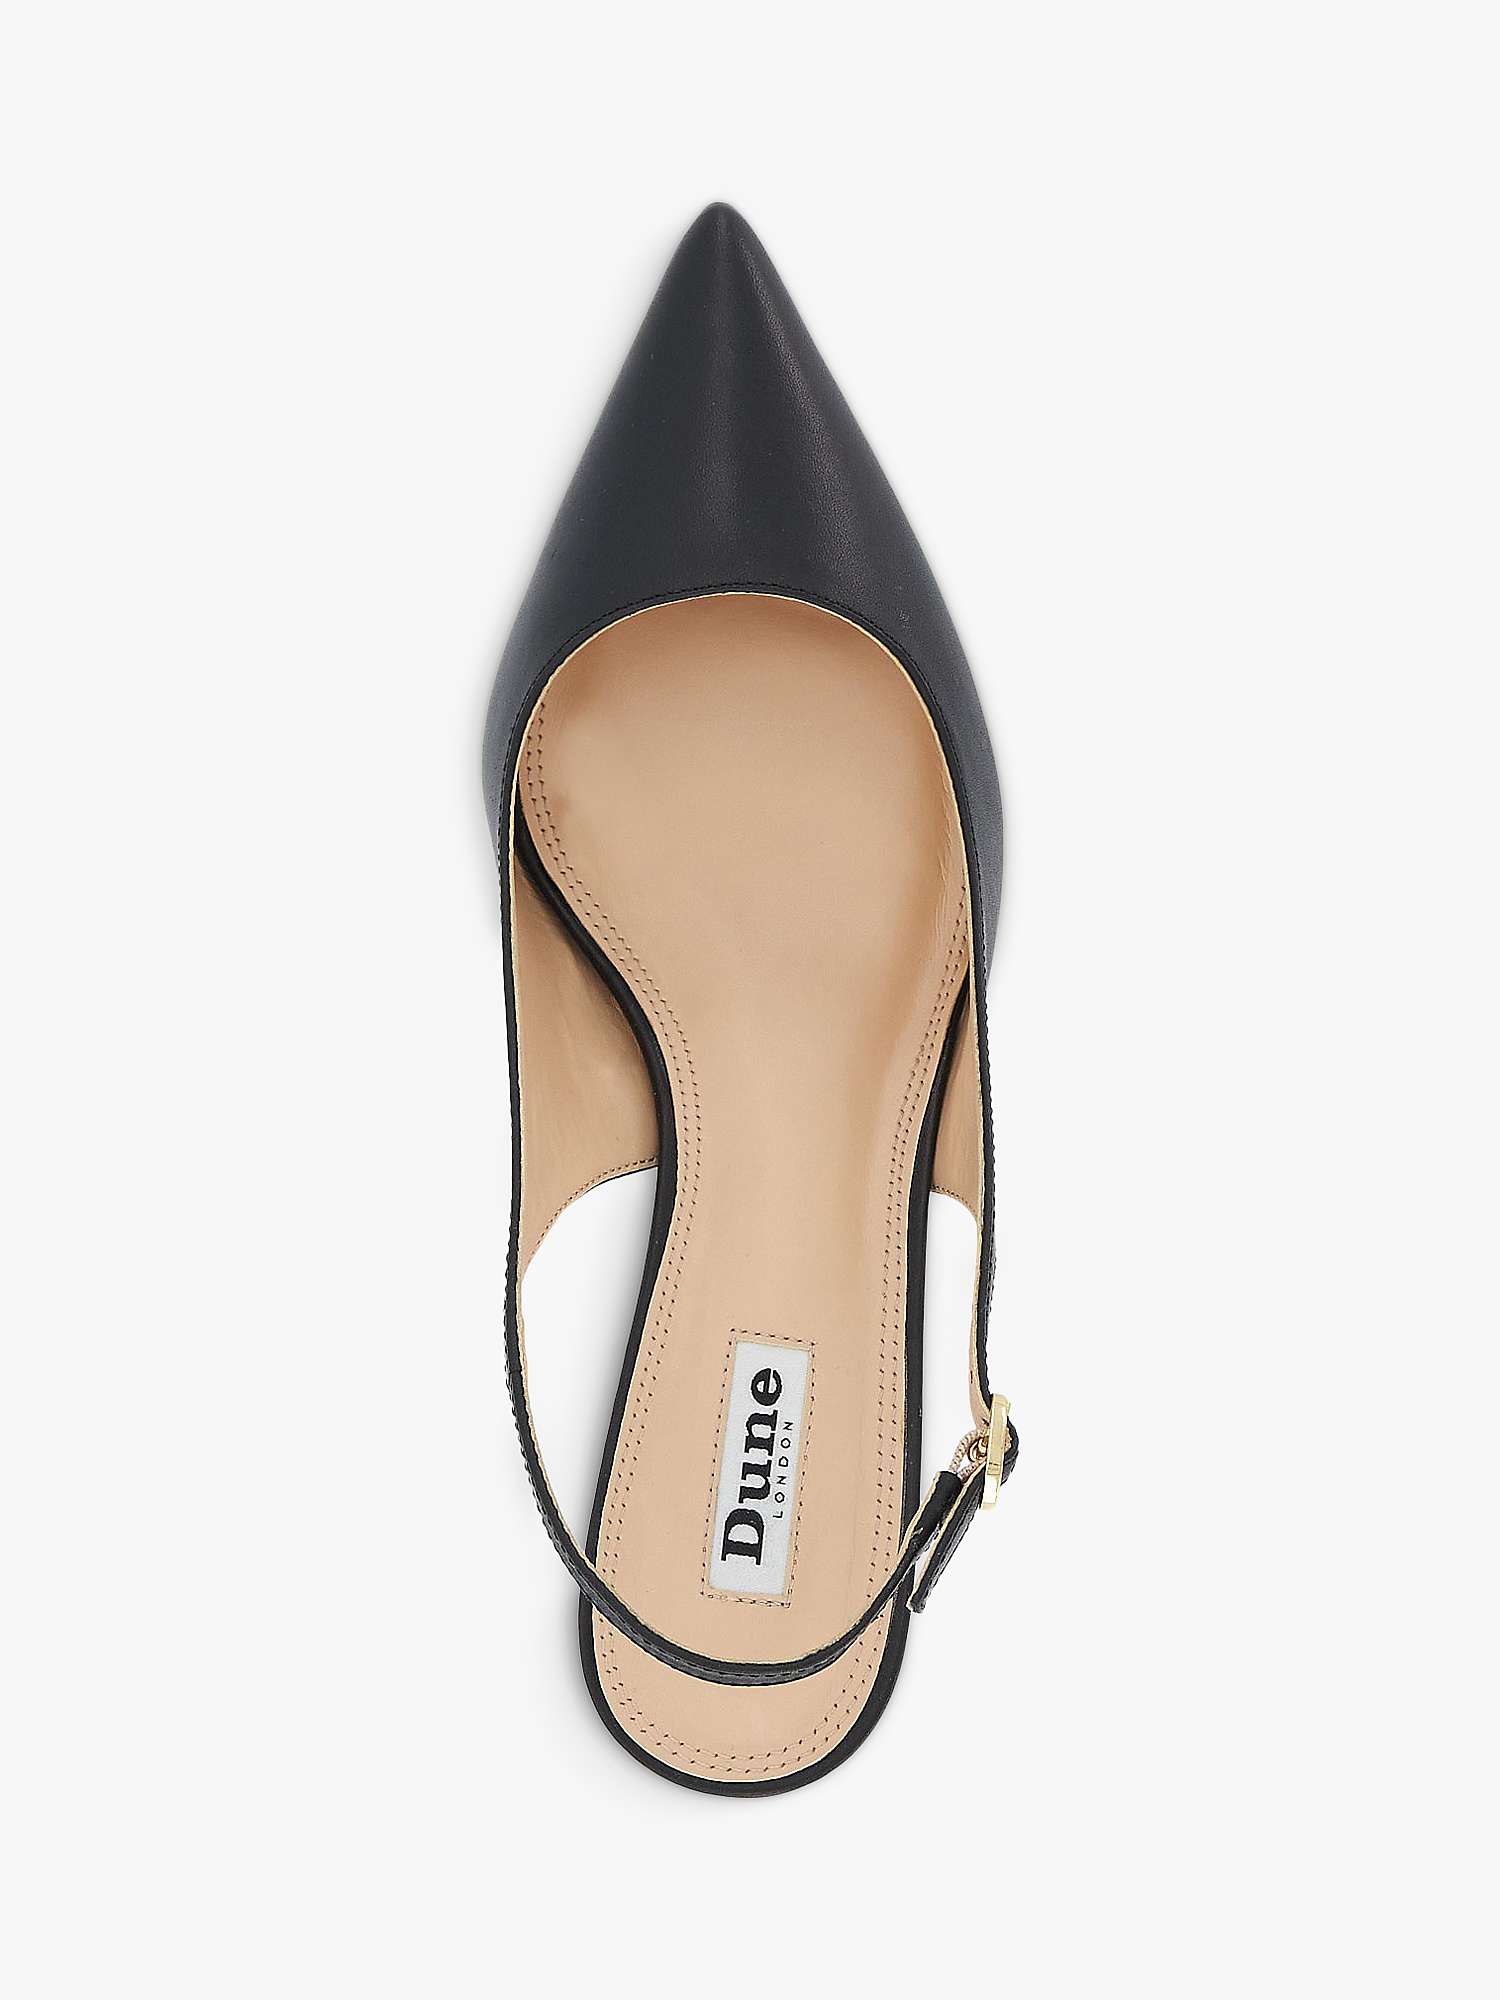 Buy Dune Celini Leather Court Shoes, Black Online at johnlewis.com